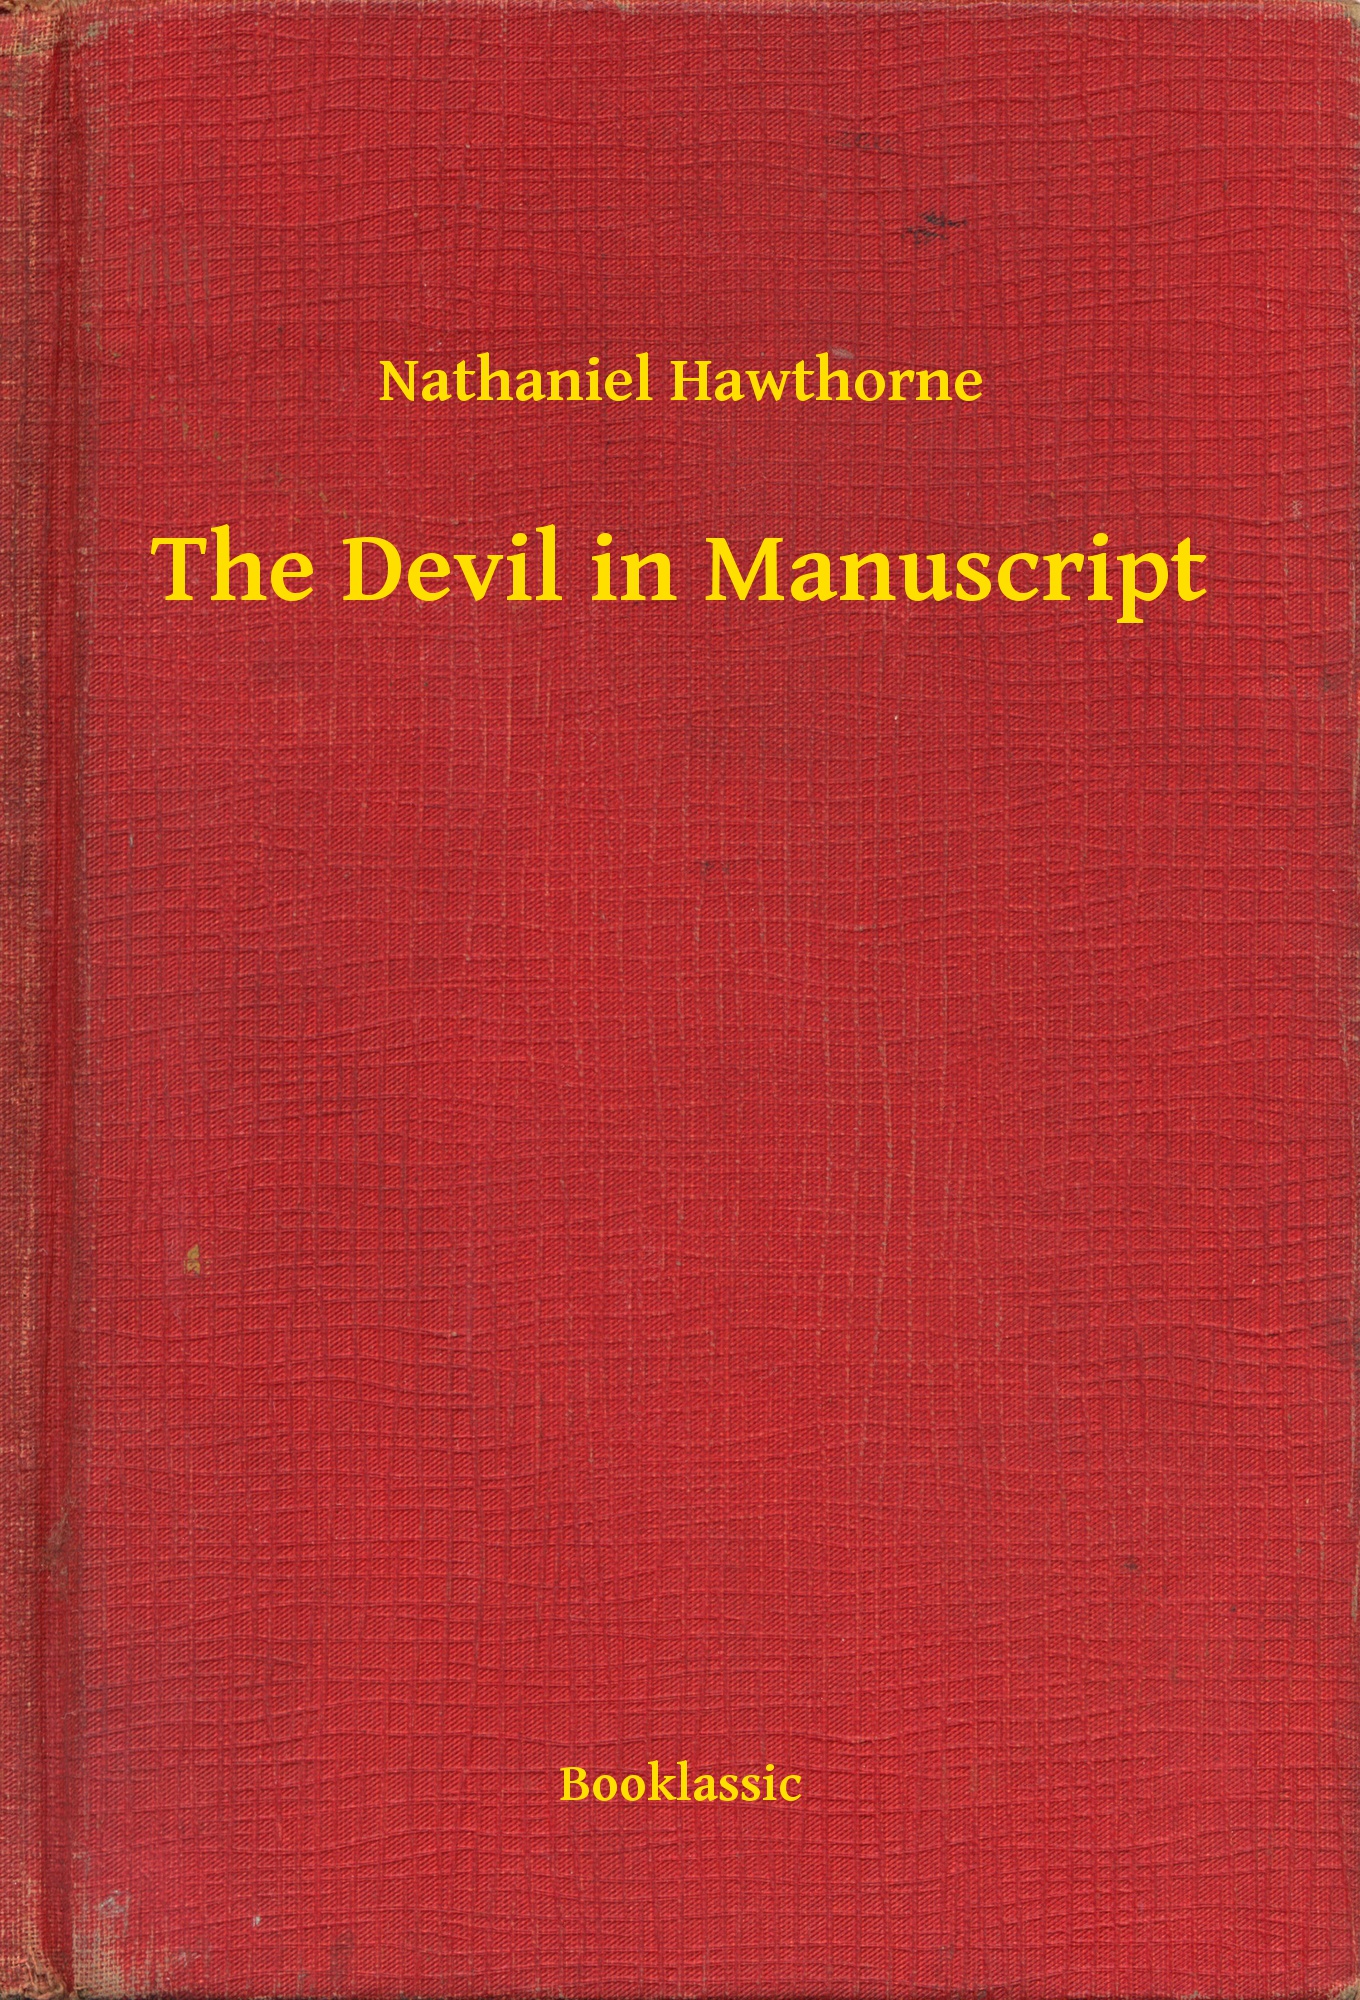 The Devil in Manuscript